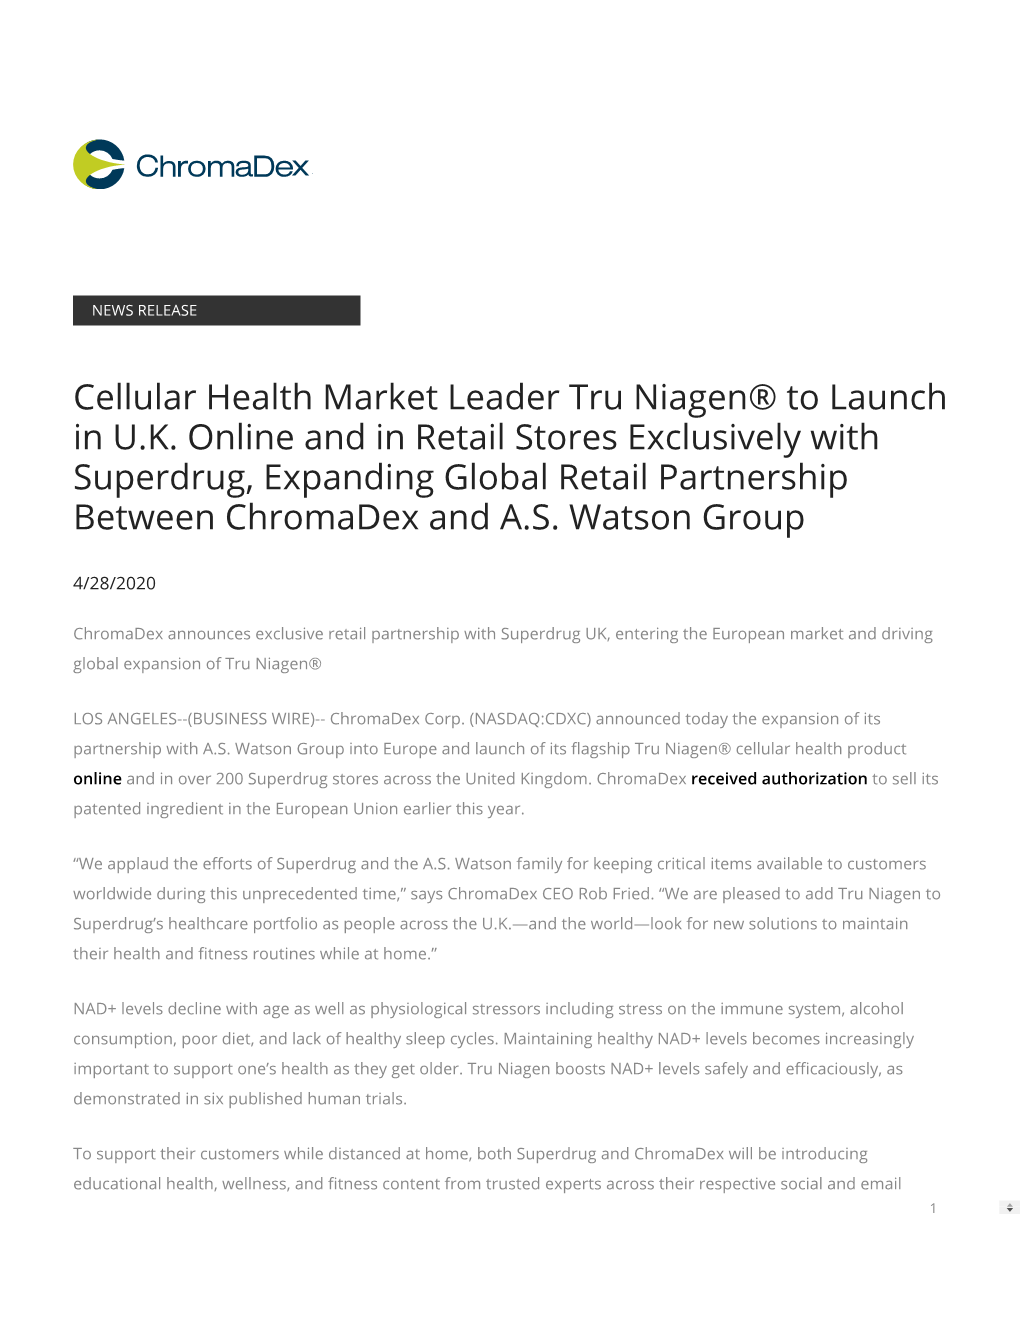 Cellular Health Market Leader Tru Niagen® to Launch in U.K. Online